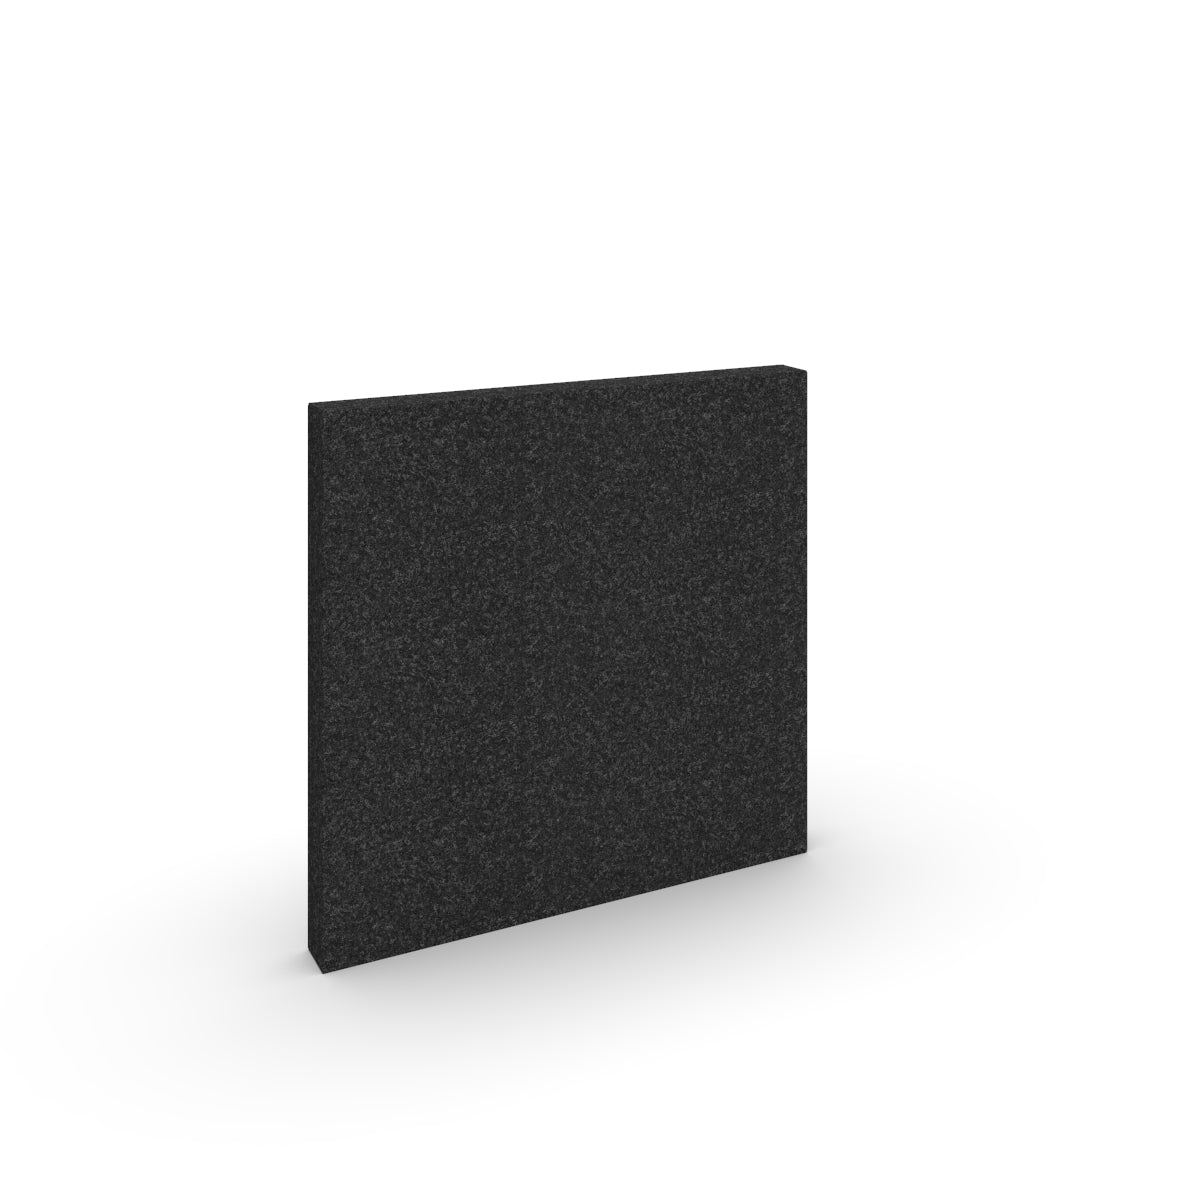 Square Basic wall sound absorber in black melange acoustic wool felt. Akustikkplater og lyddemping vegg